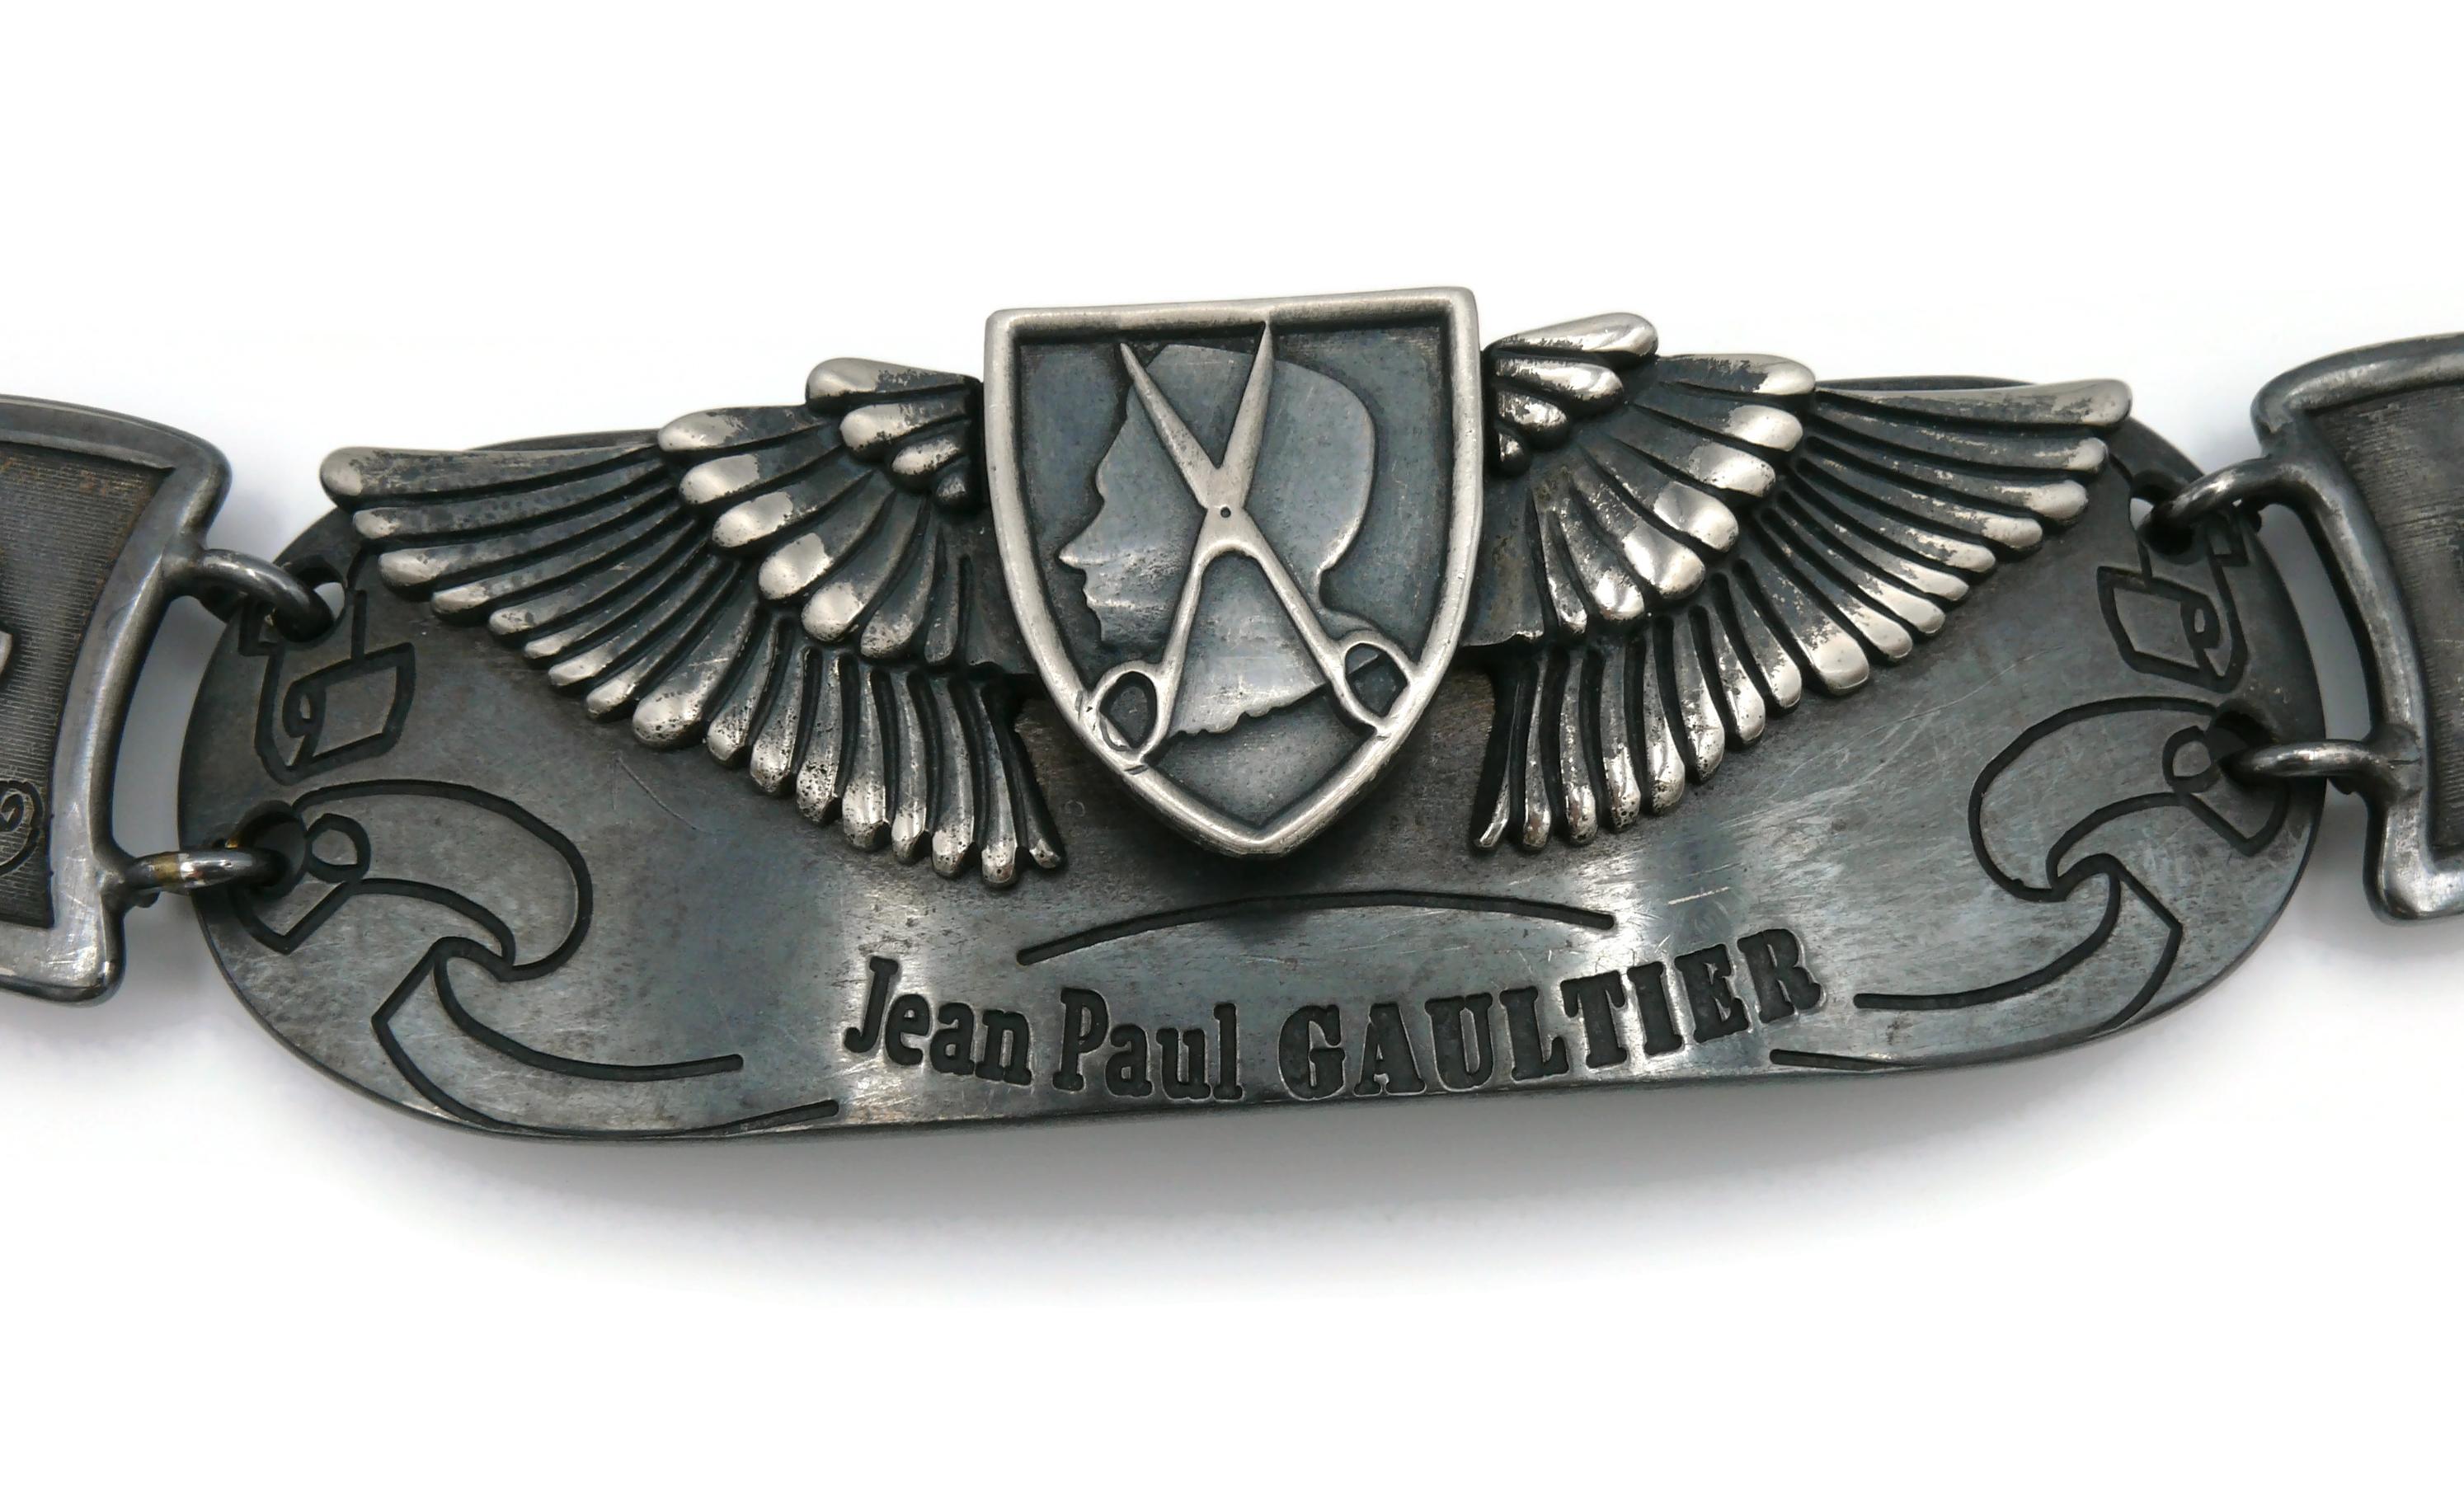 JEAN PAUL GAULTIER Vintage Limited Edition Moto Belt 